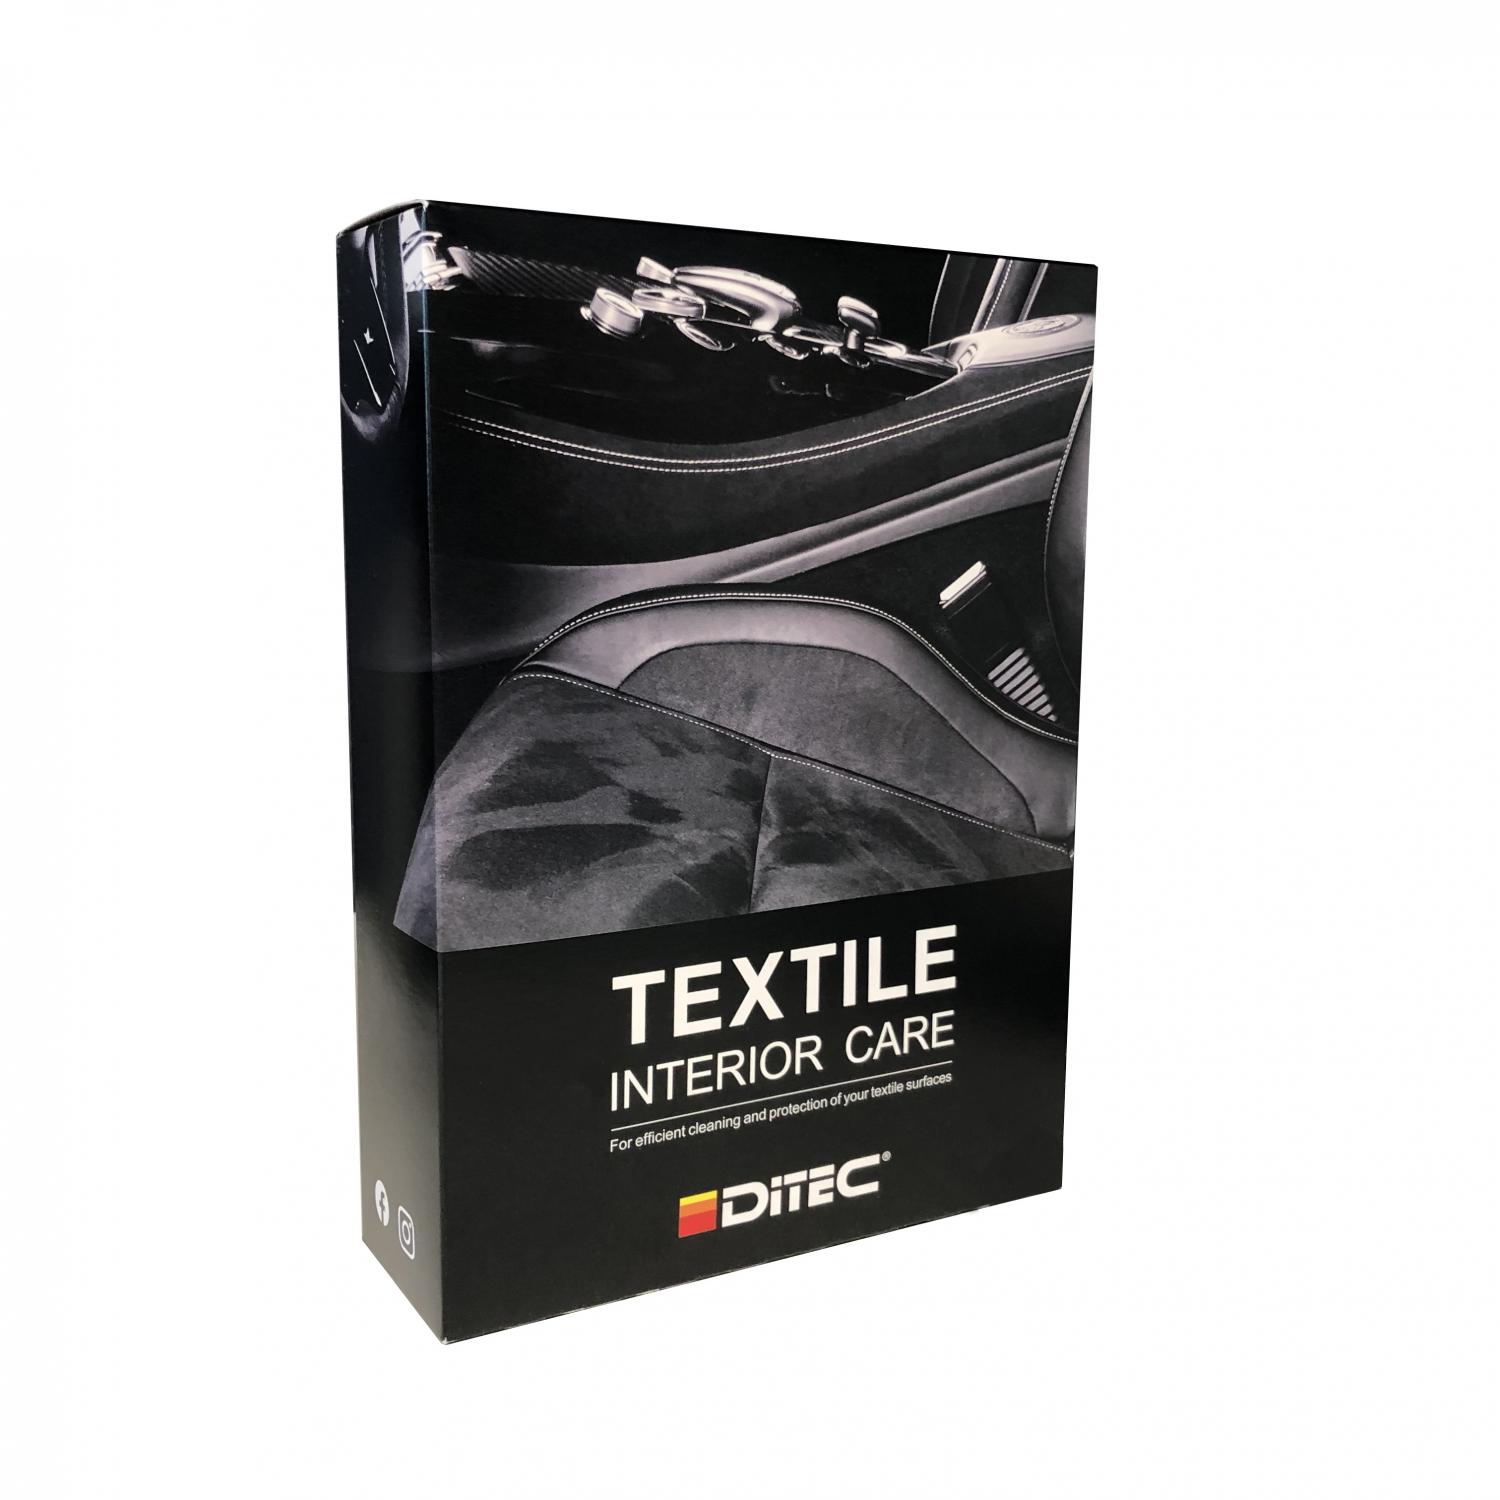 Ditec Textile Interiör Care